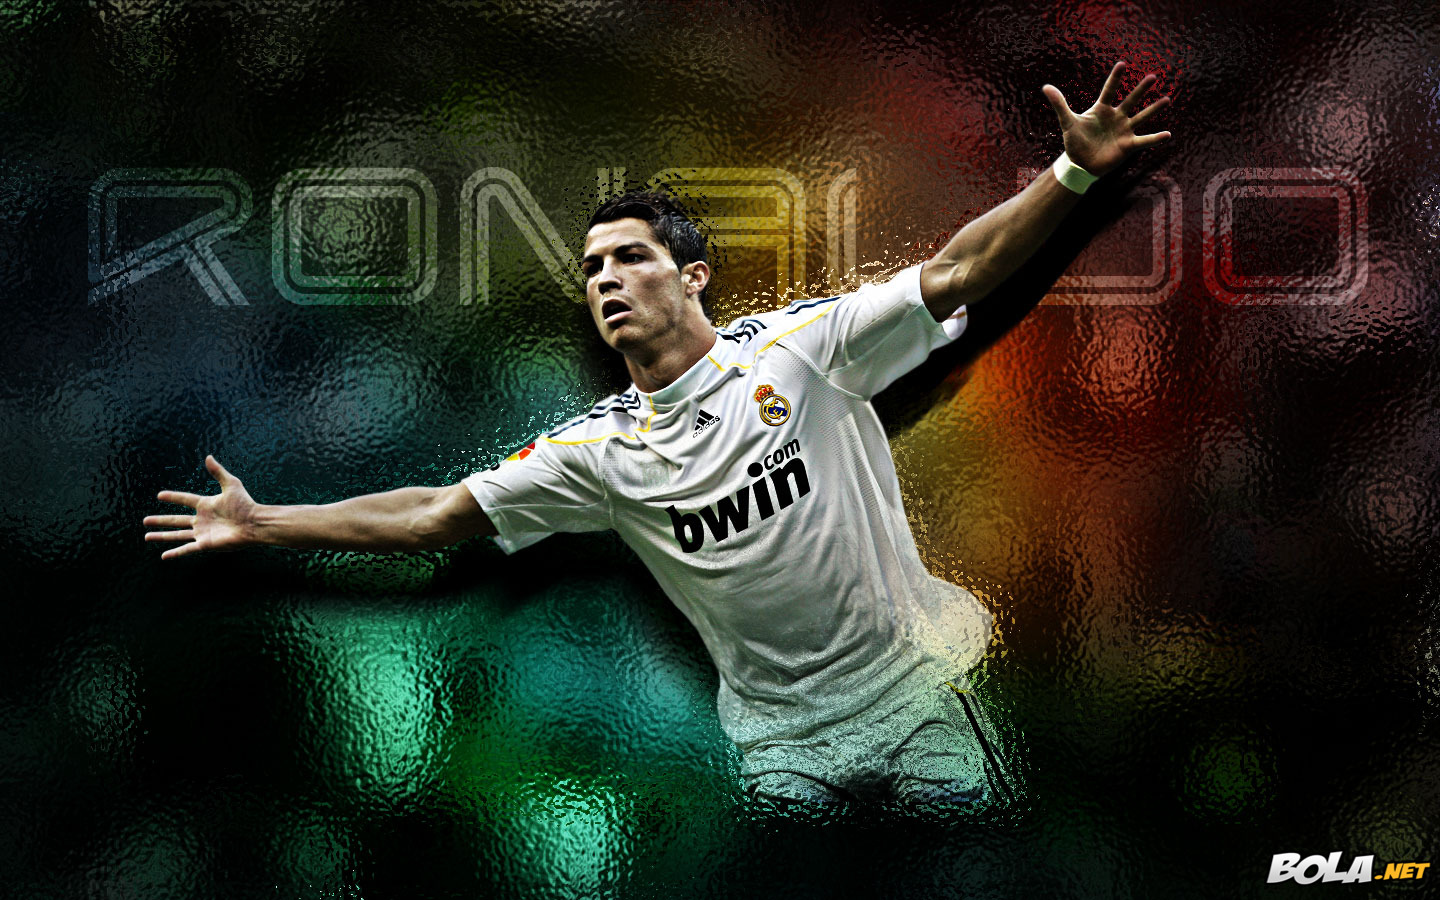 Deskripsi : Wallpaper Ronaldo Flies, size: 1440x900